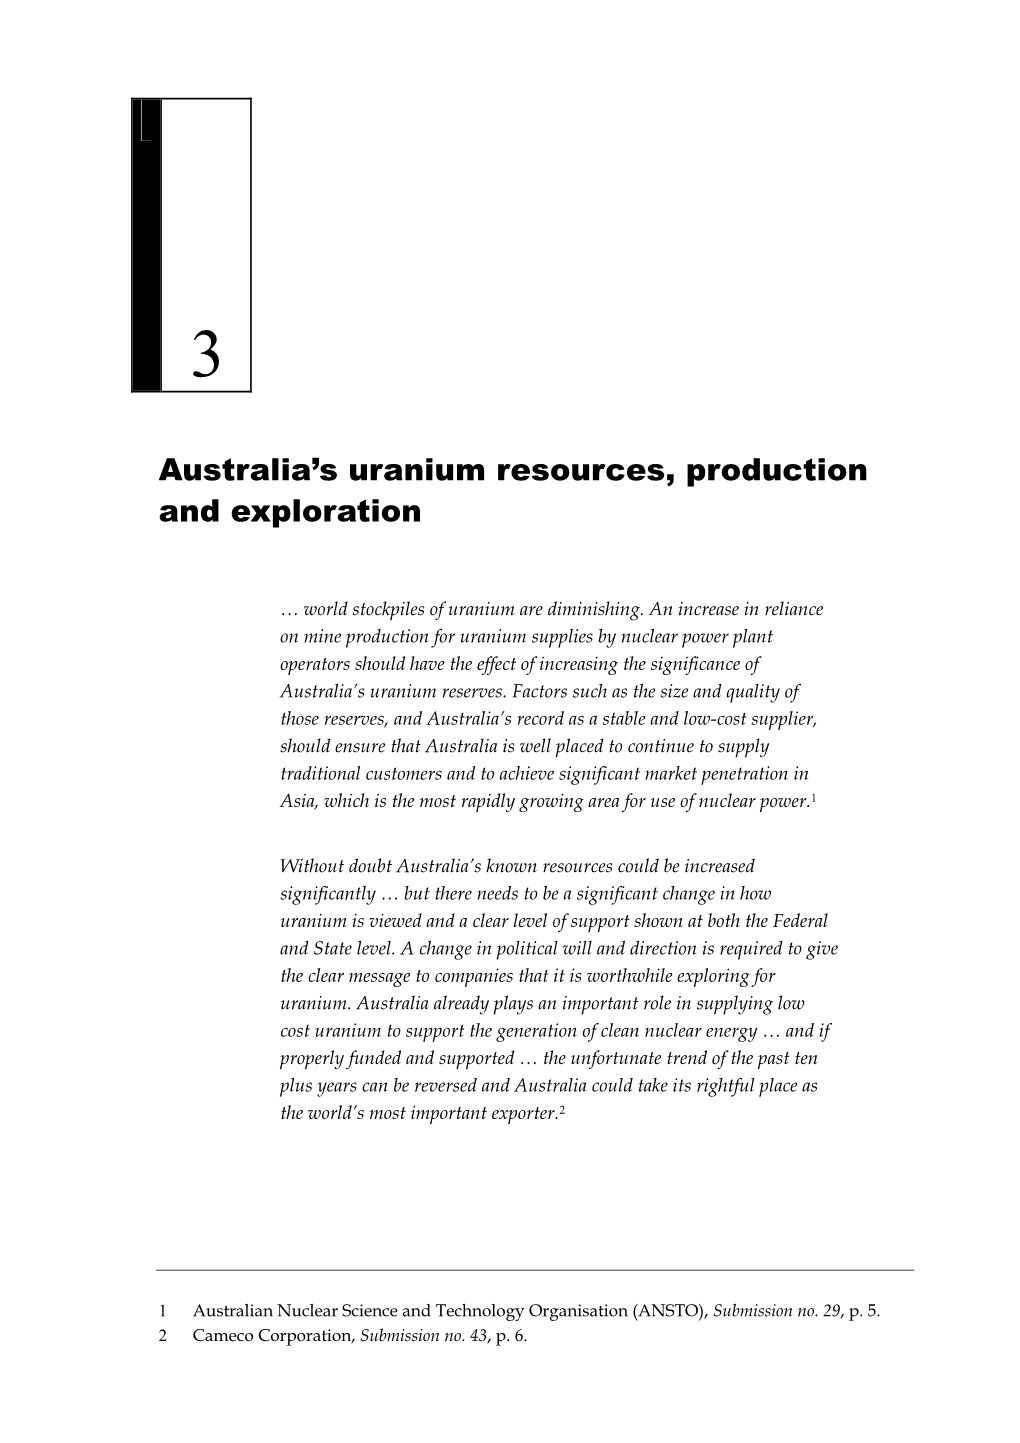 Australia's Uranium Resources, Production and Exploration